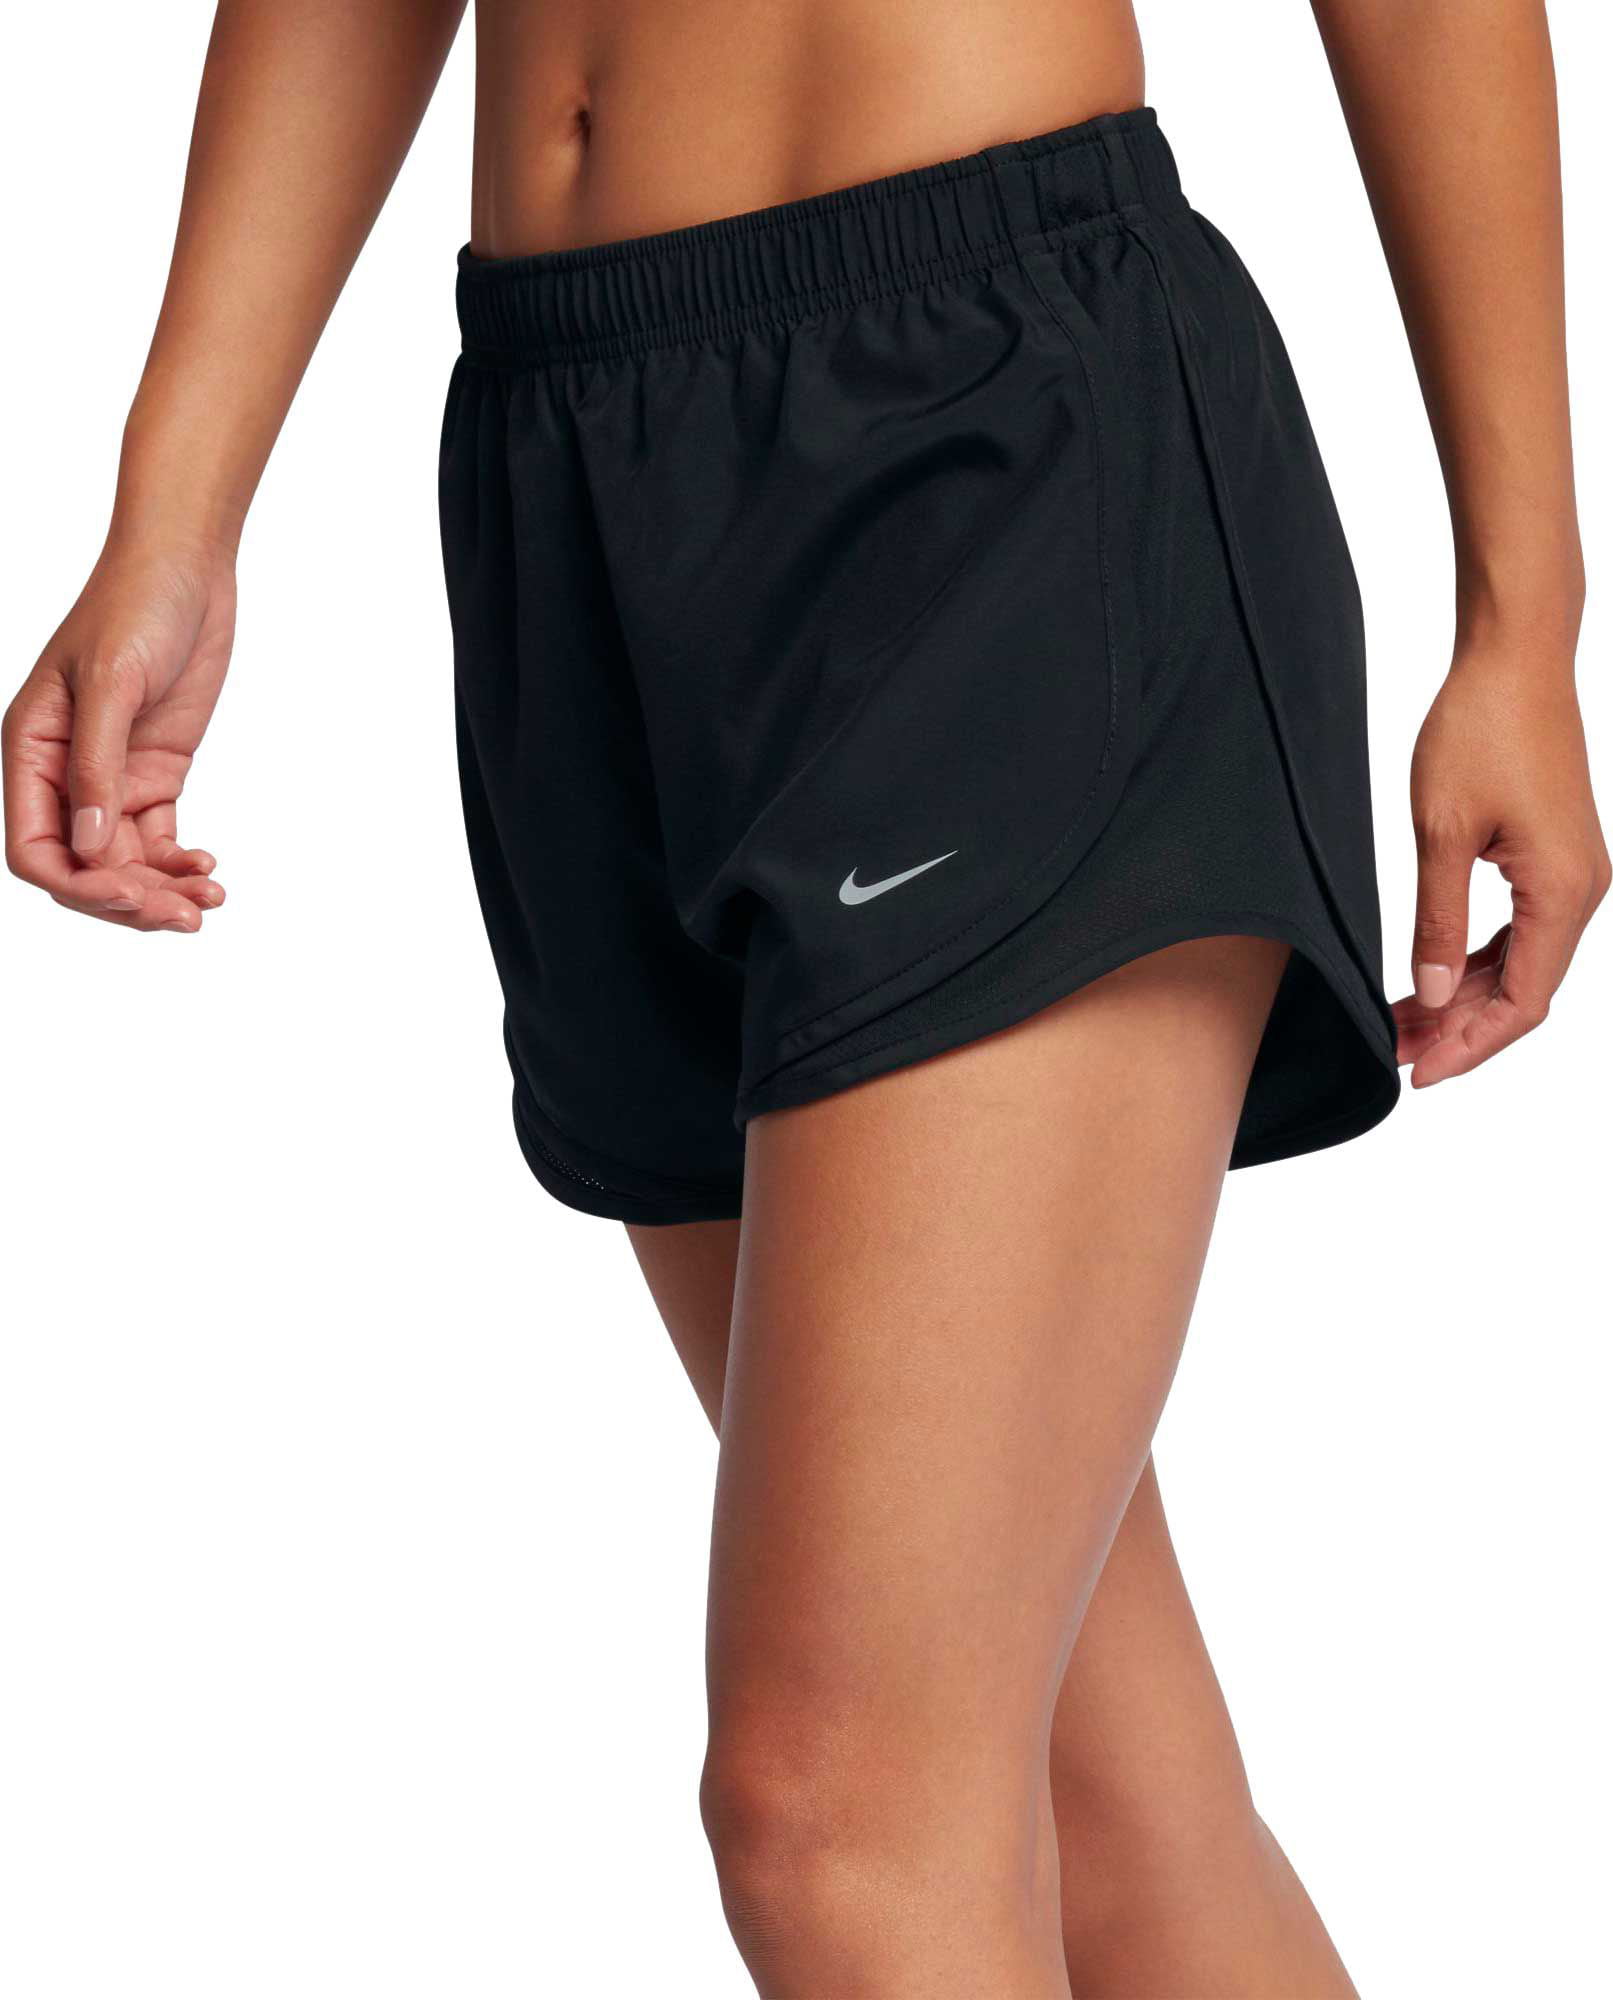 nike women's 3 running shorts